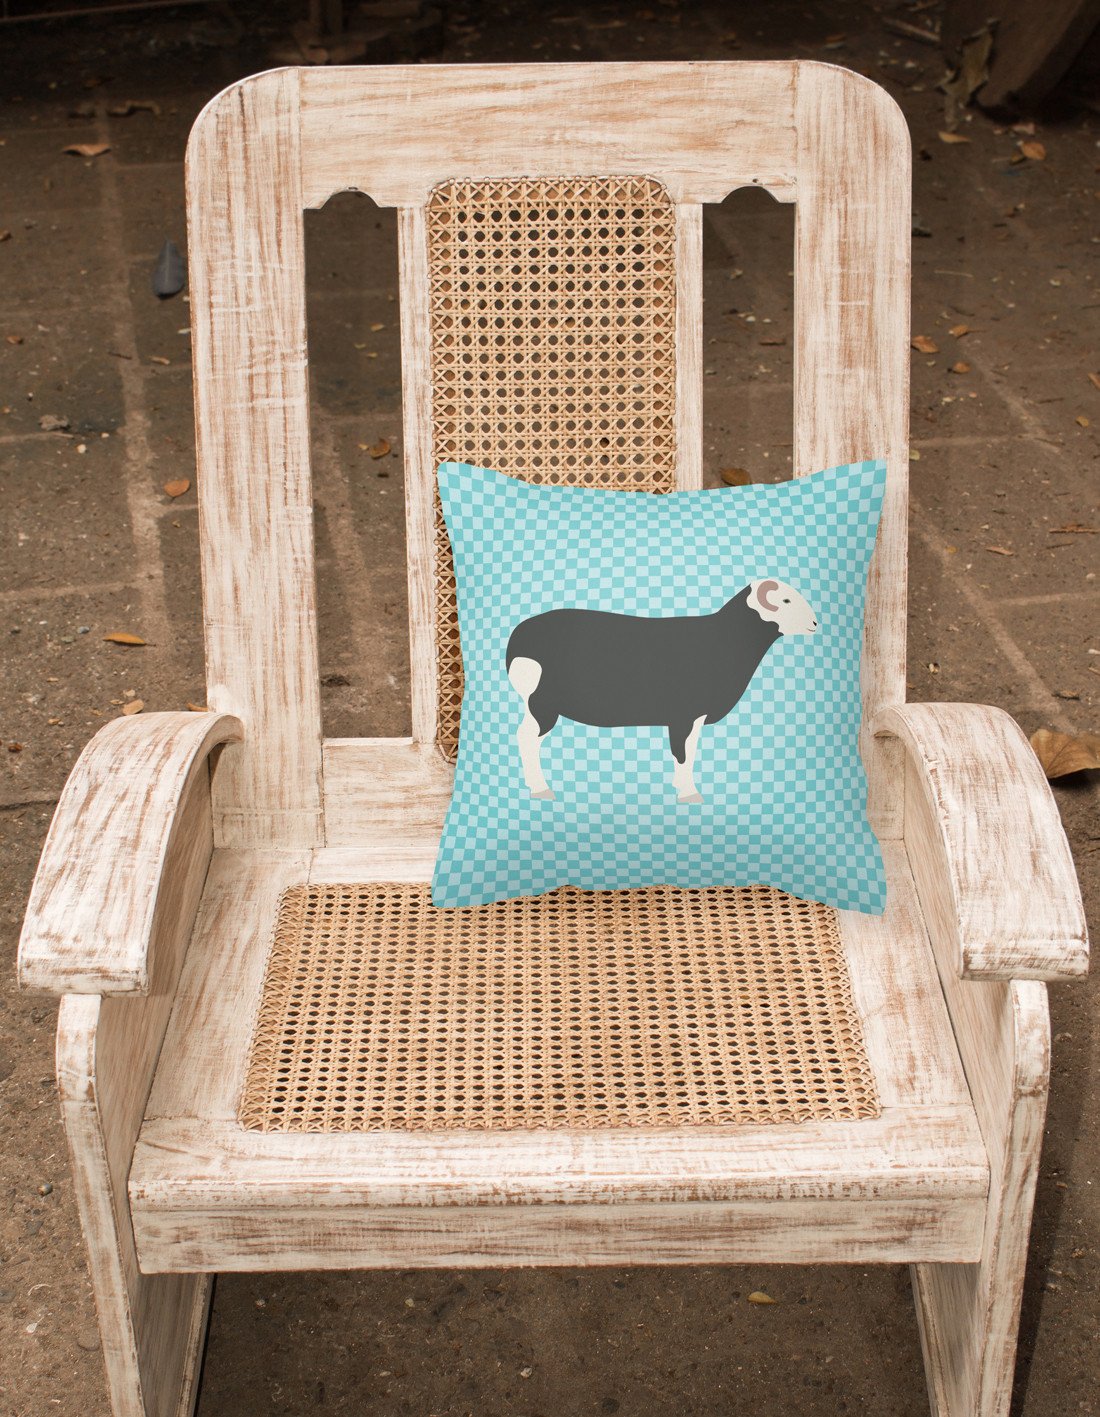 Herwick Sheep Blue Check Fabric Decorative Pillow BB8144PW1818 by Caroline's Treasures